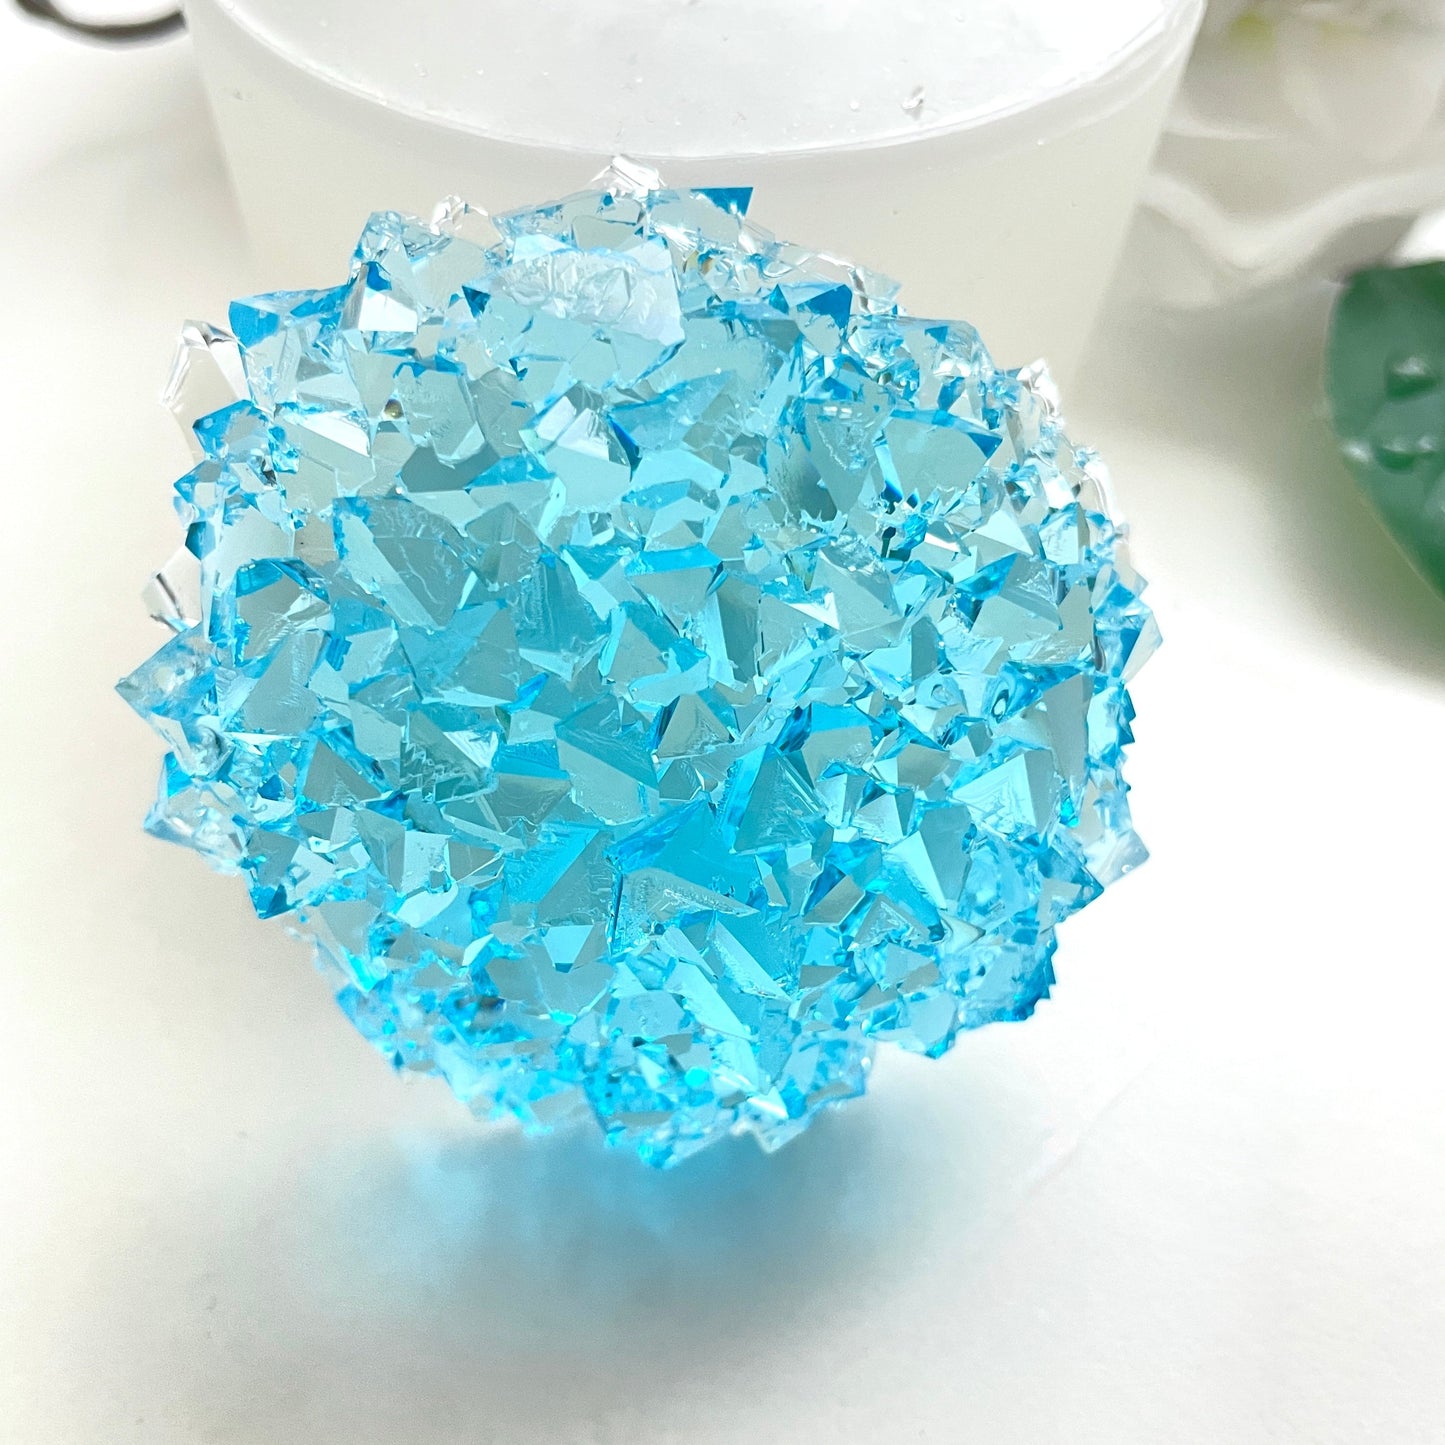 Strahlende Pracht: Mittlere Kristallcluster-Silikonform